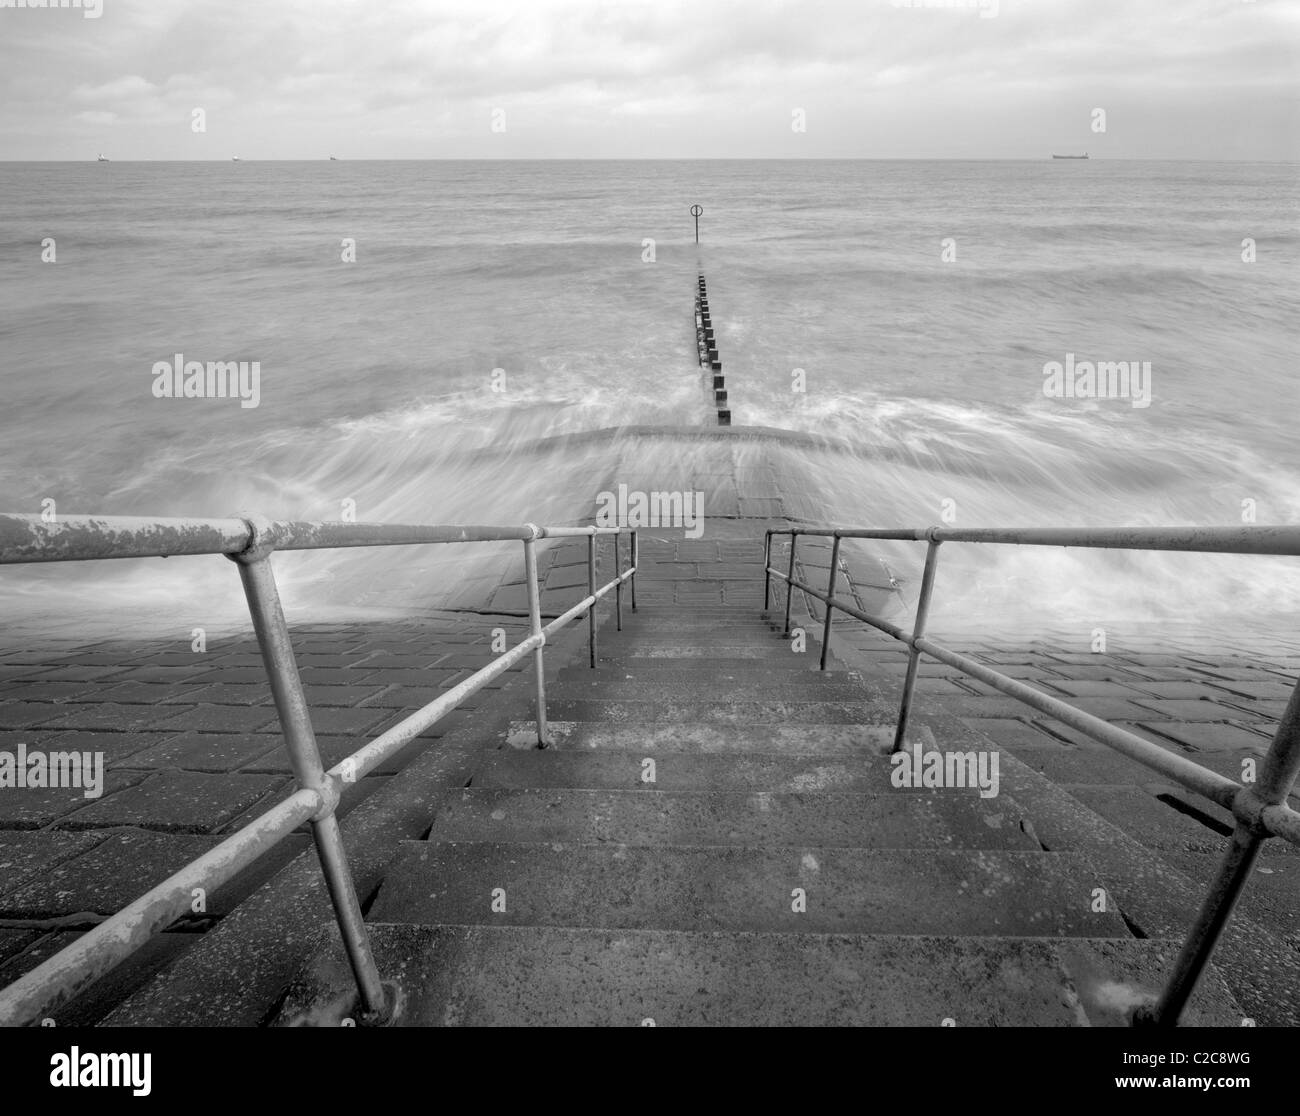 Waves over concrete embankment - Aberdeen beach esplanade - Aberdeen - Scotland - UK Stock Photo